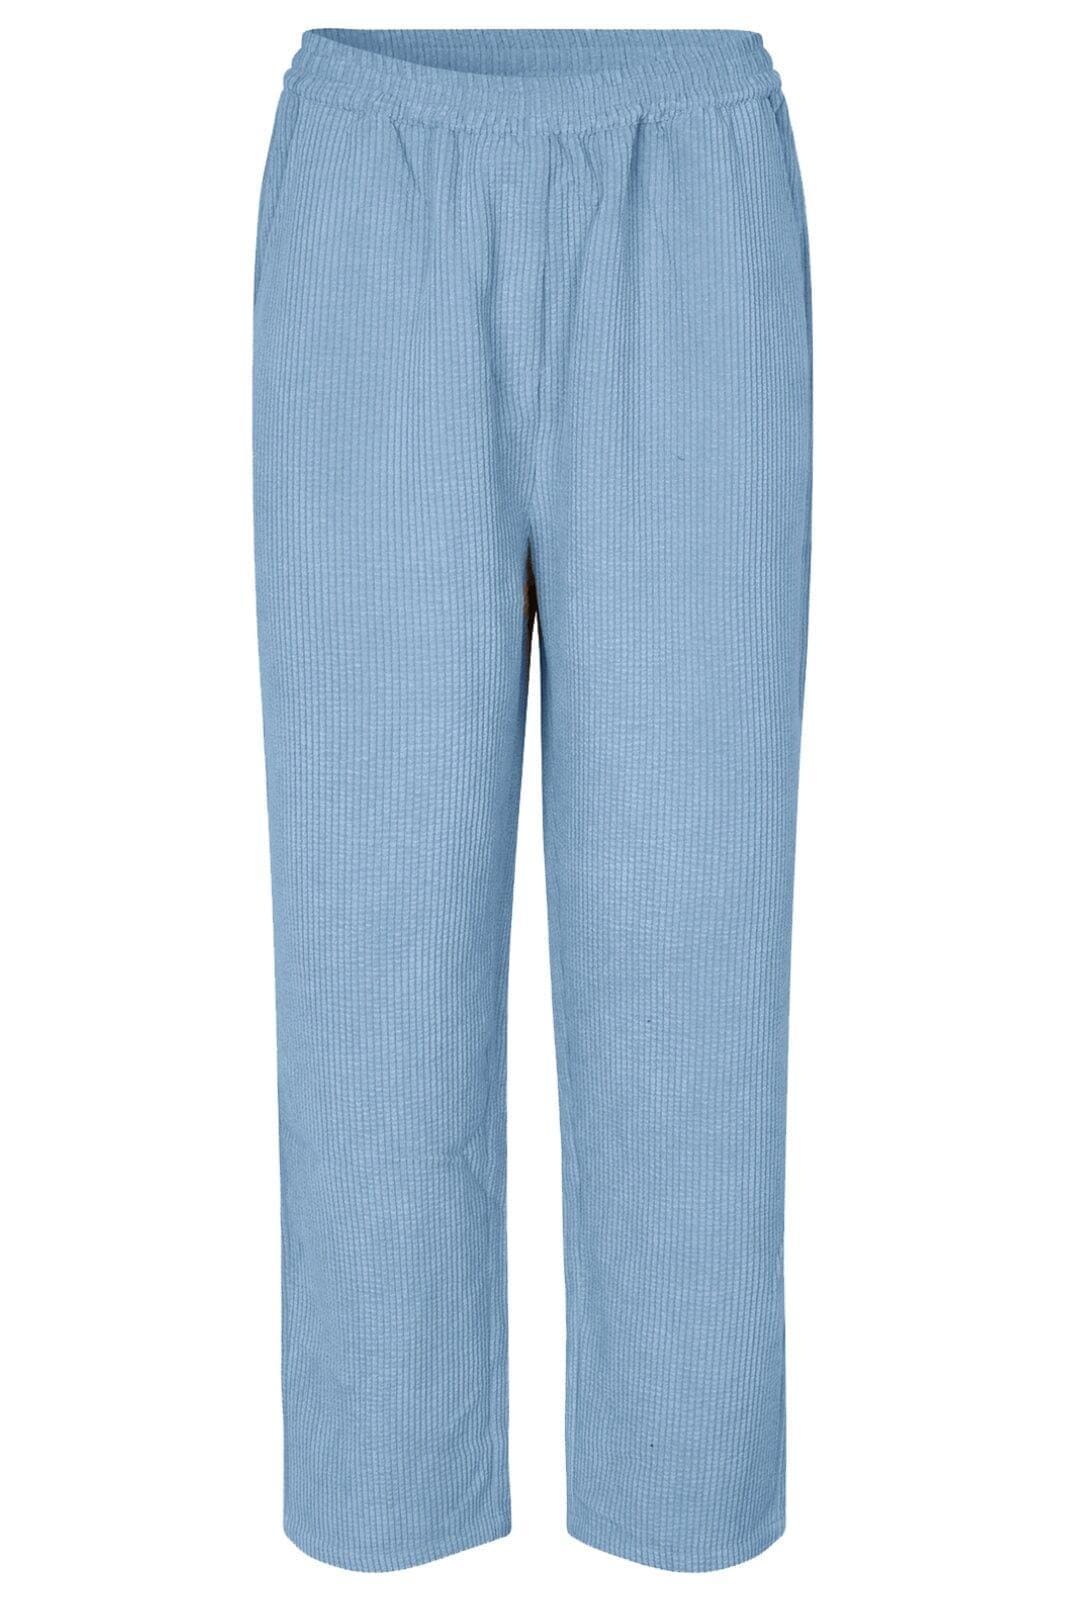 Lollys Laundry - Billll Pants - 29 Dusty Blue Bukser 